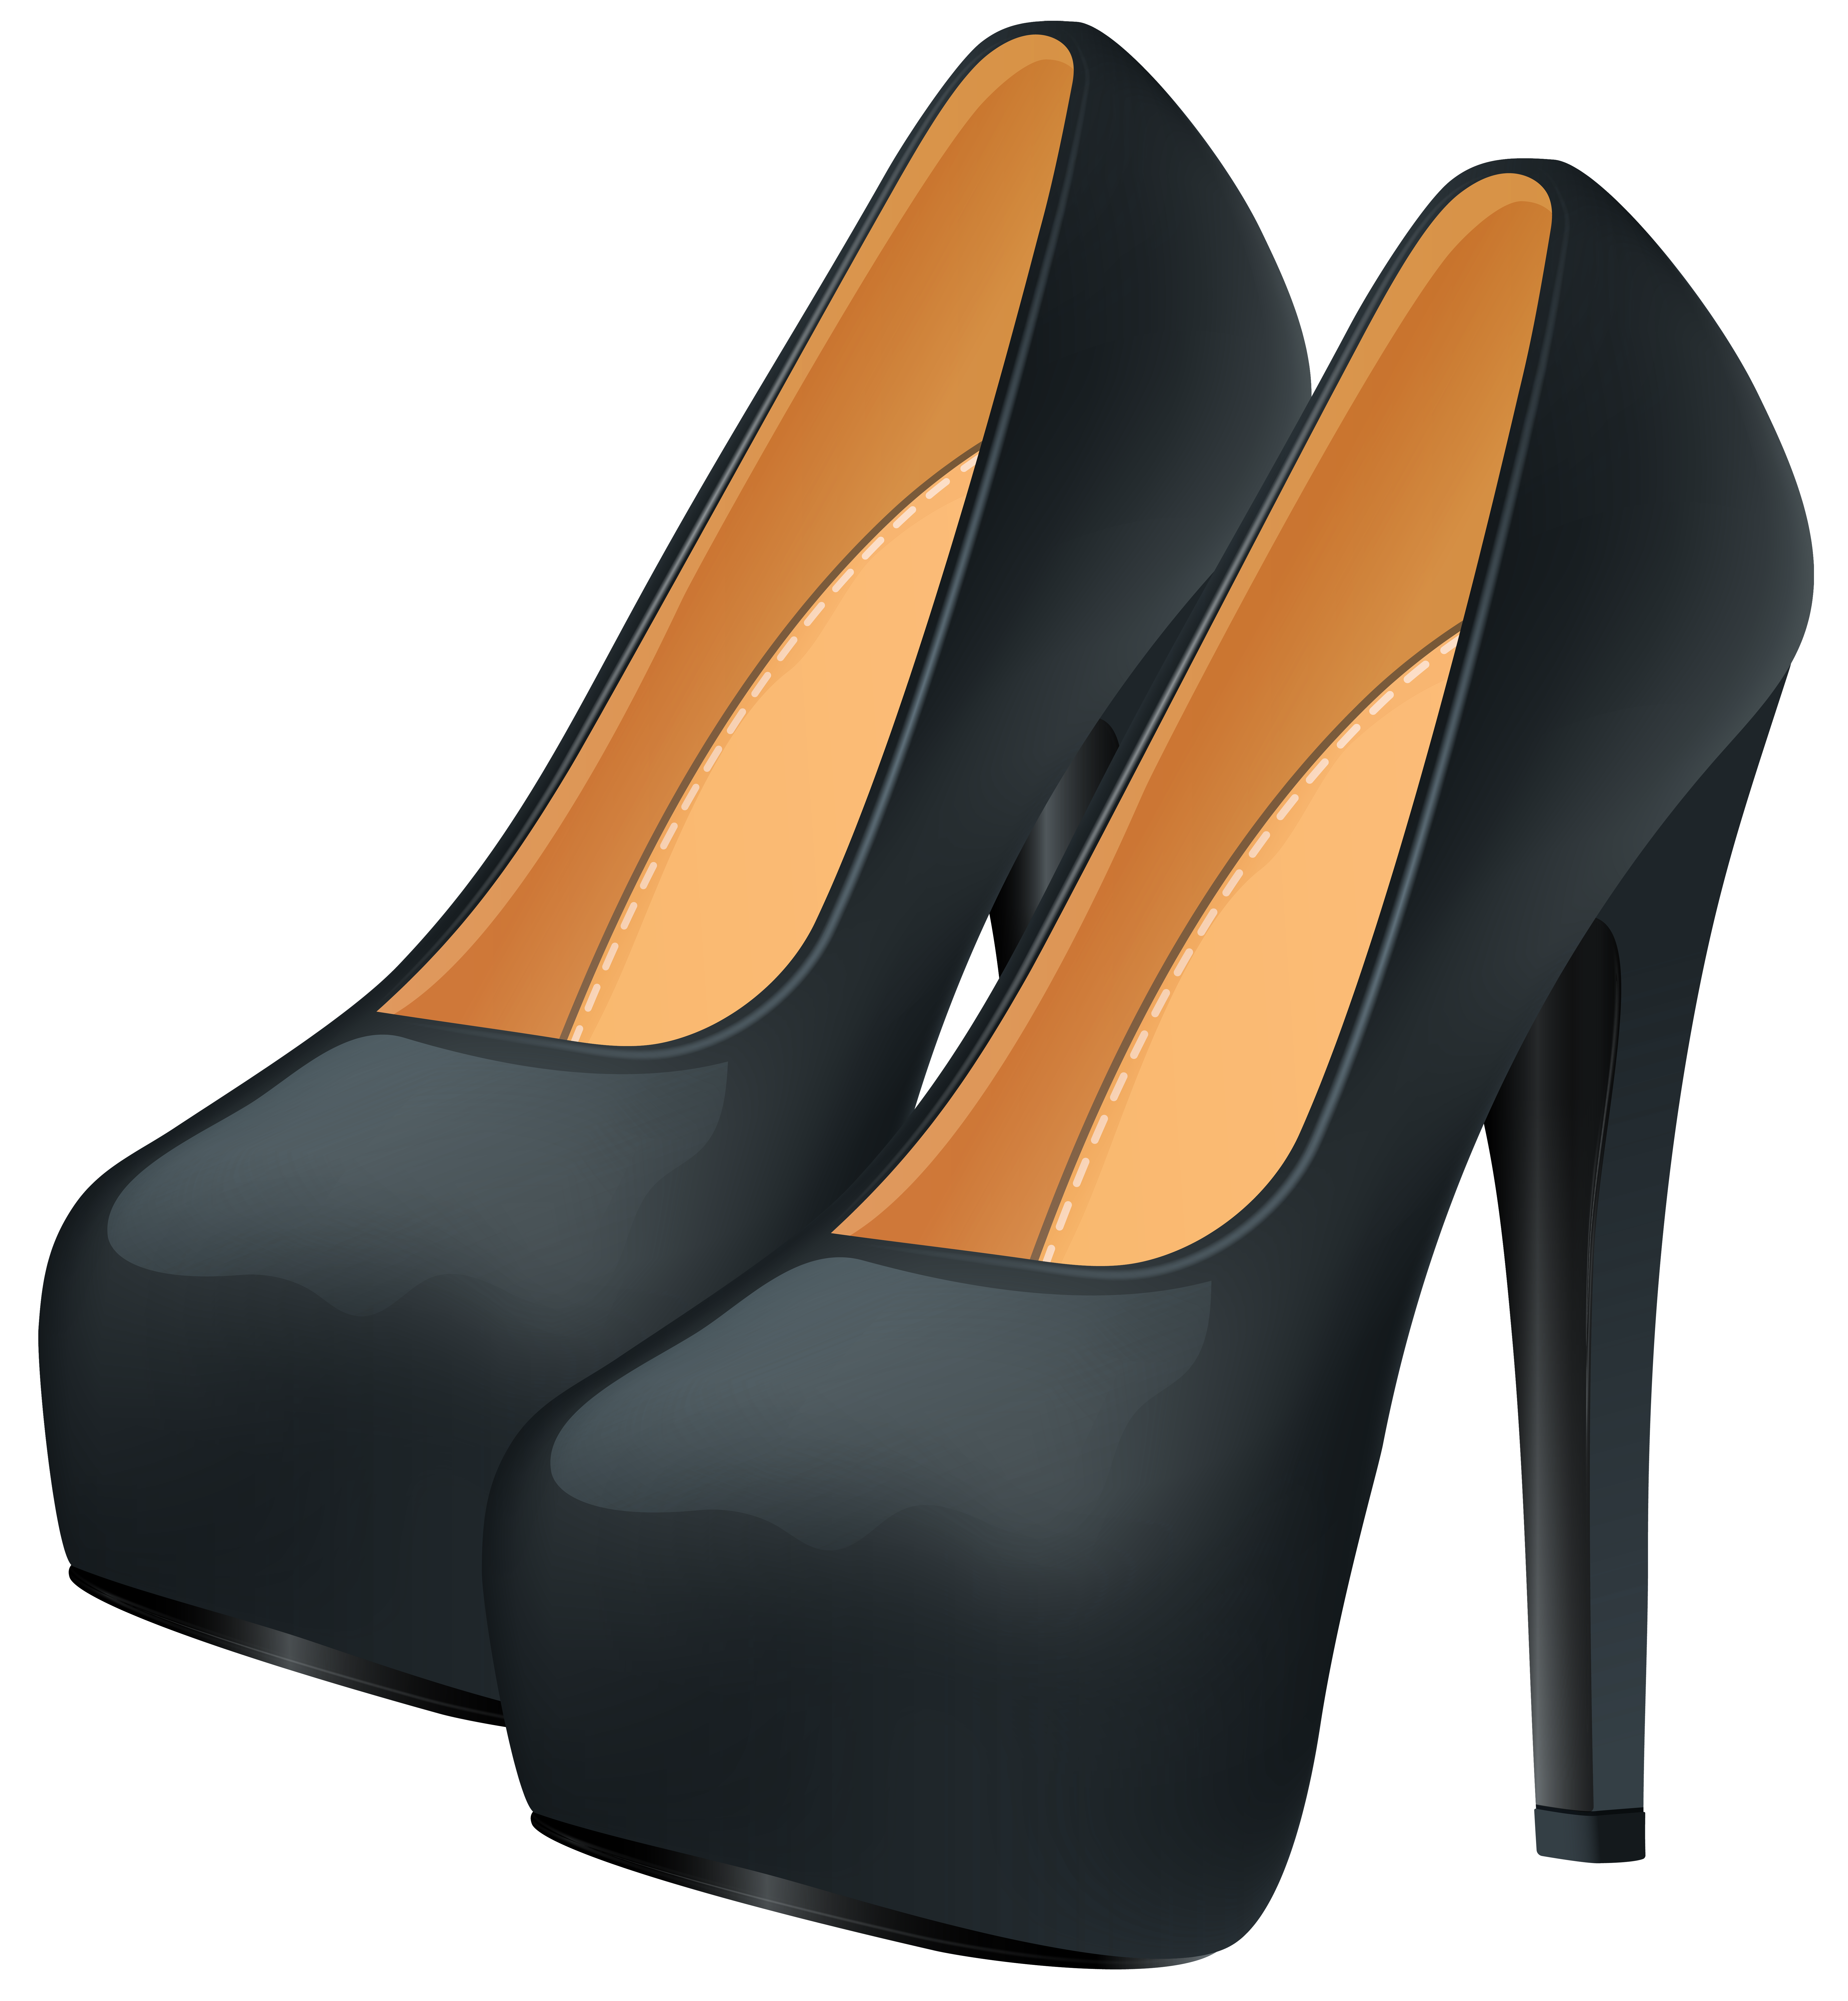 Download High Heels Black Shoe Free Clipart HQ HQ PNG Image